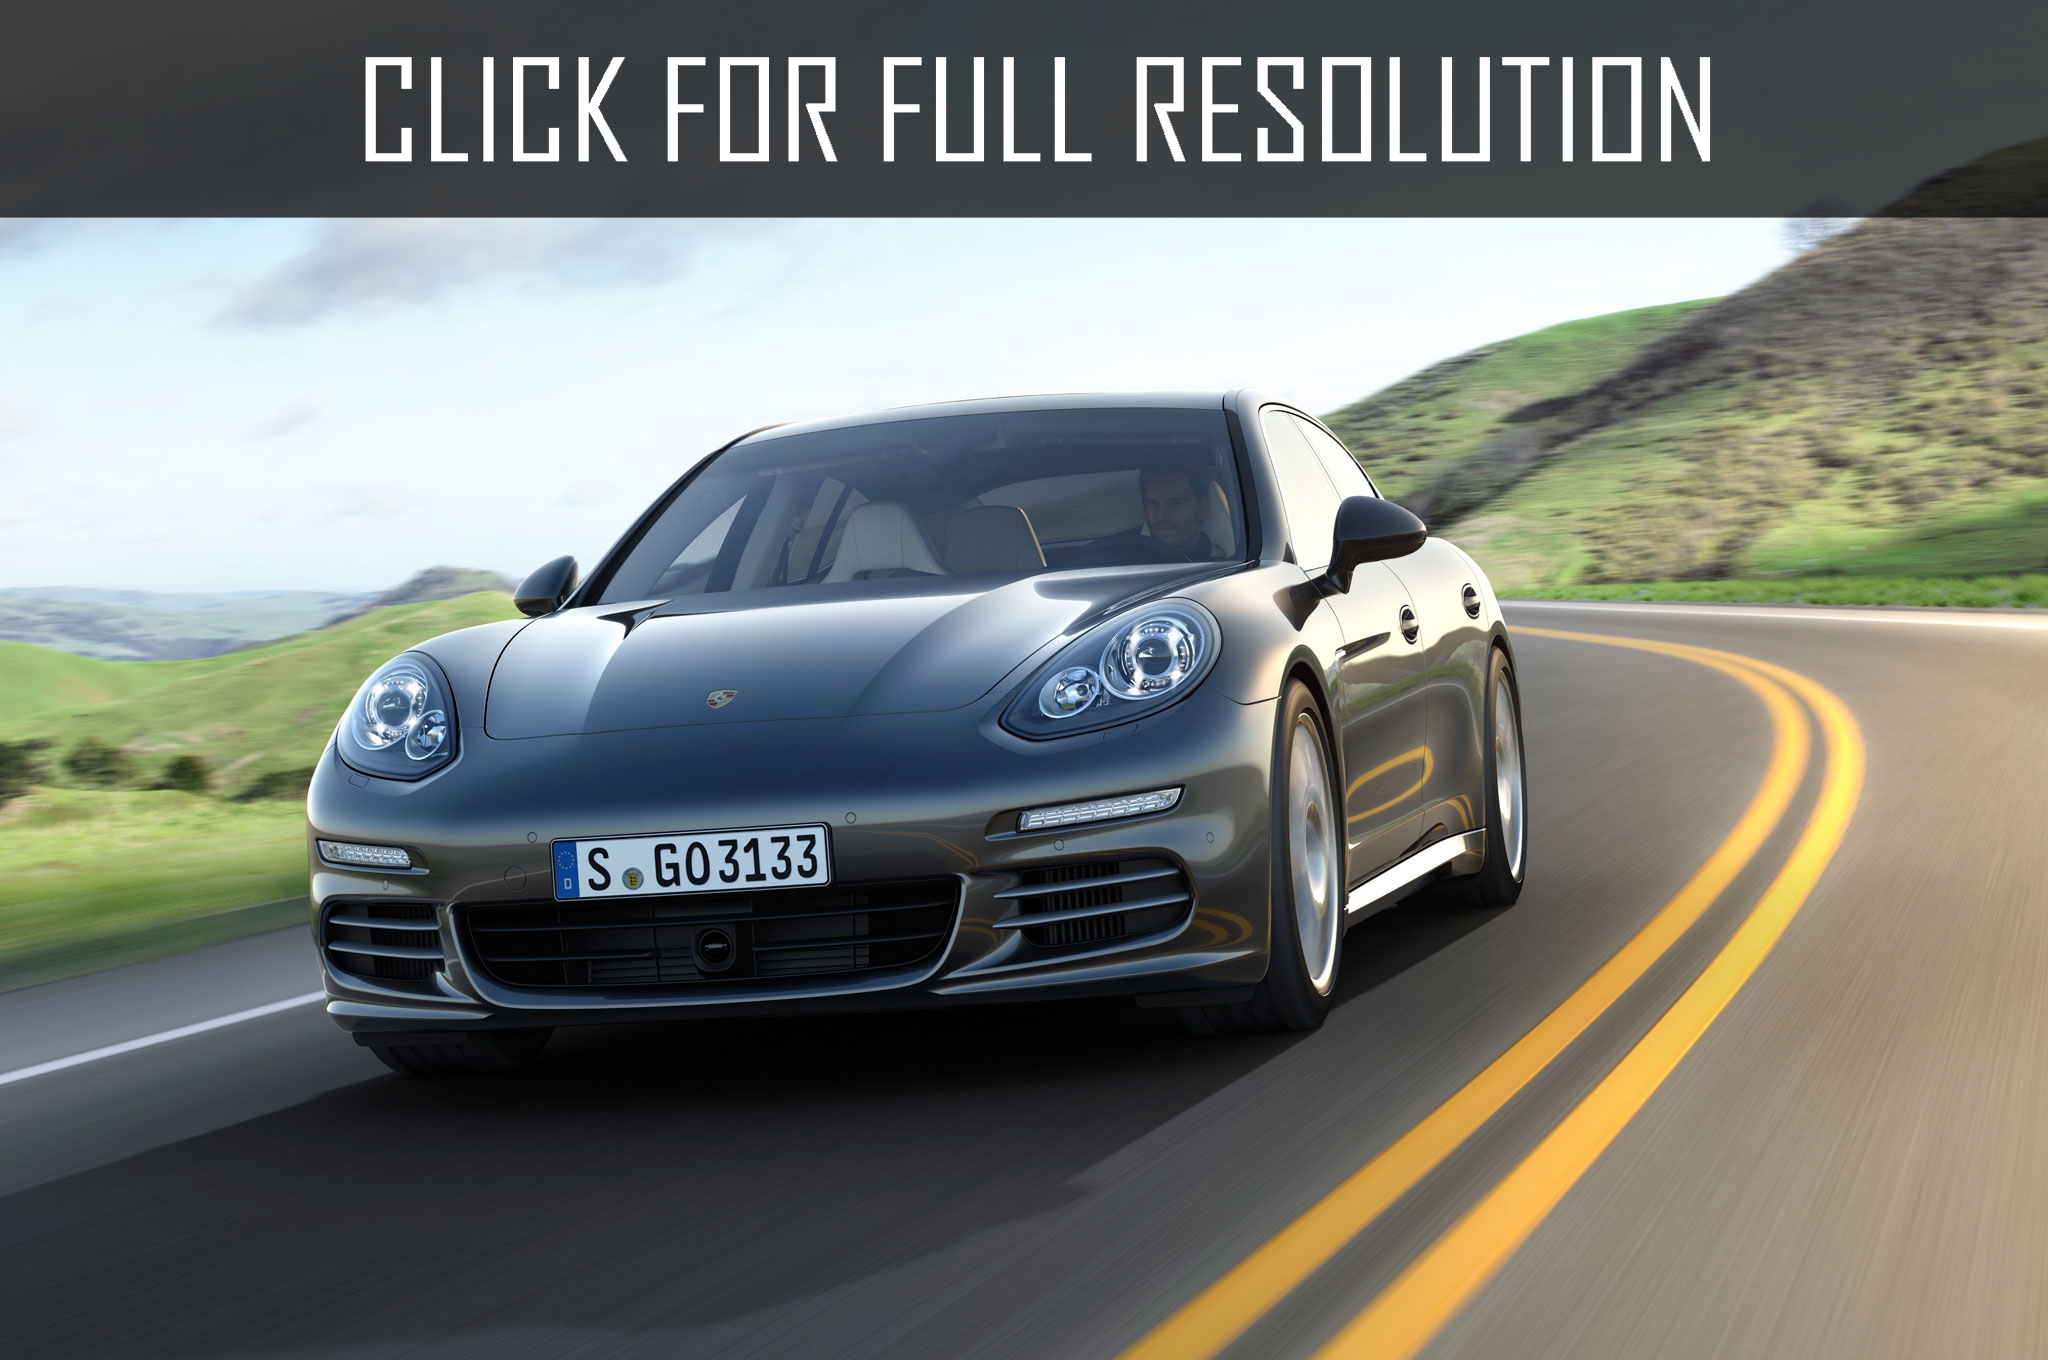 2014 Porsche Panamera 4S